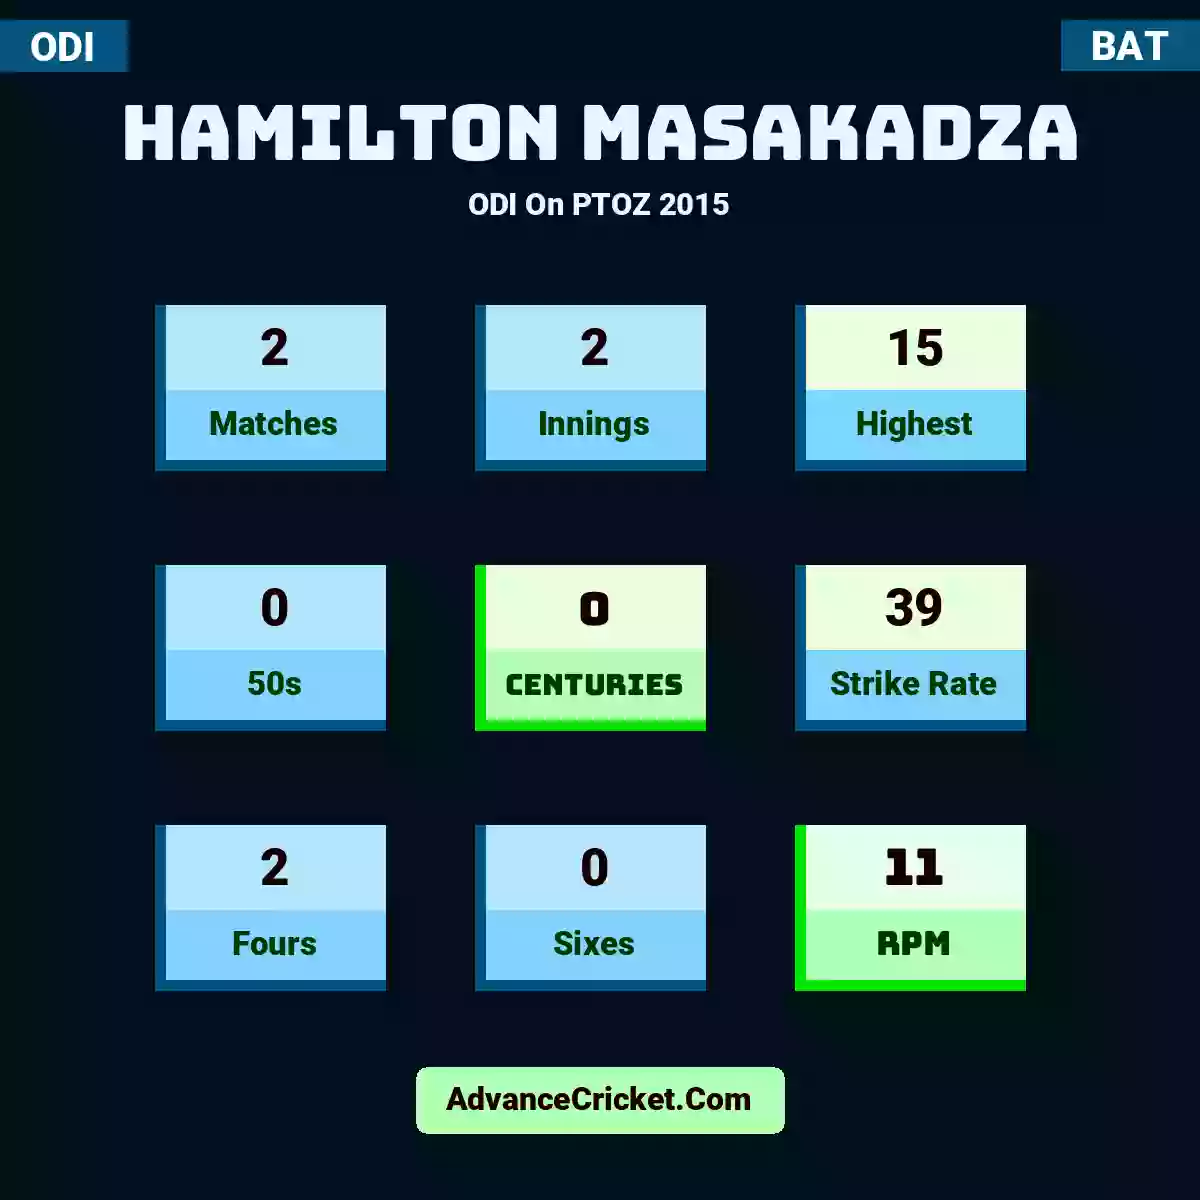 Hamilton Masakadza ODI  On PTOZ 2015, Hamilton Masakadza played 2 matches, scored 15 runs as highest, 0 half-centuries, and 0 centuries, with a strike rate of 39. H.Masakadza hit 2 fours and 0 sixes, with an RPM of 11.